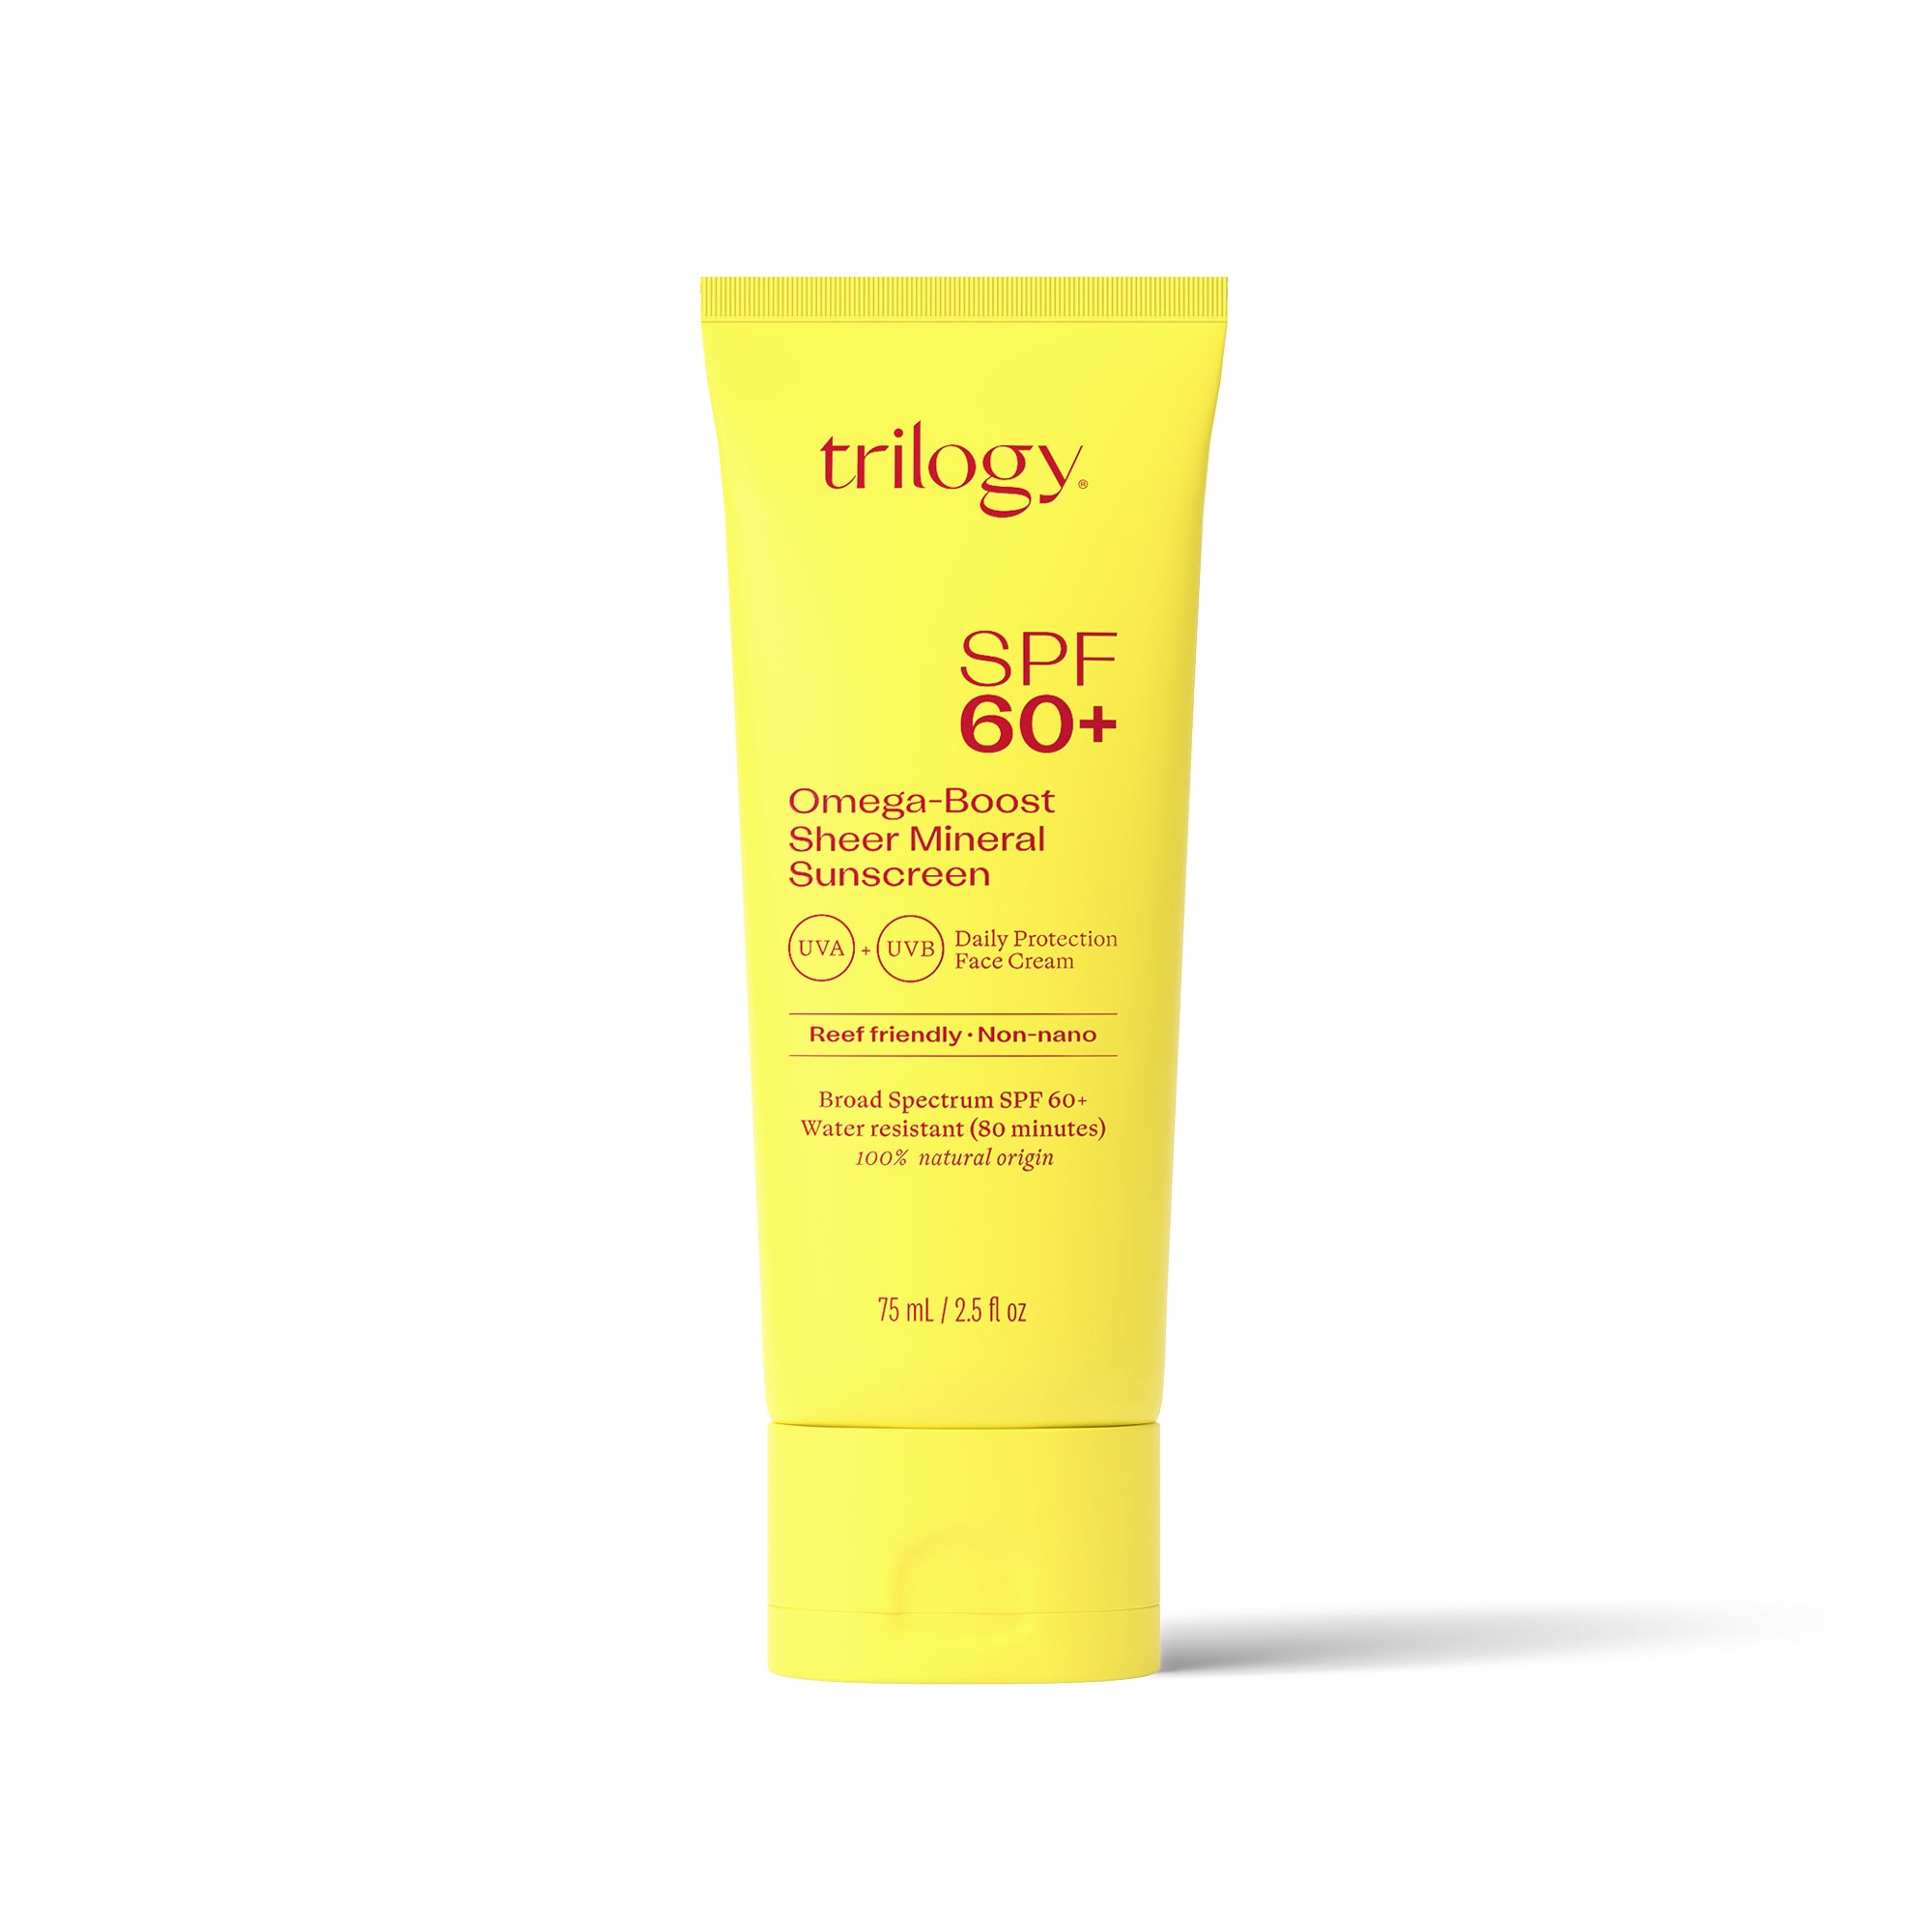 SPF 60+ Omega-Boost Sheer Mineral Sunscreen, 2.5 fl oz